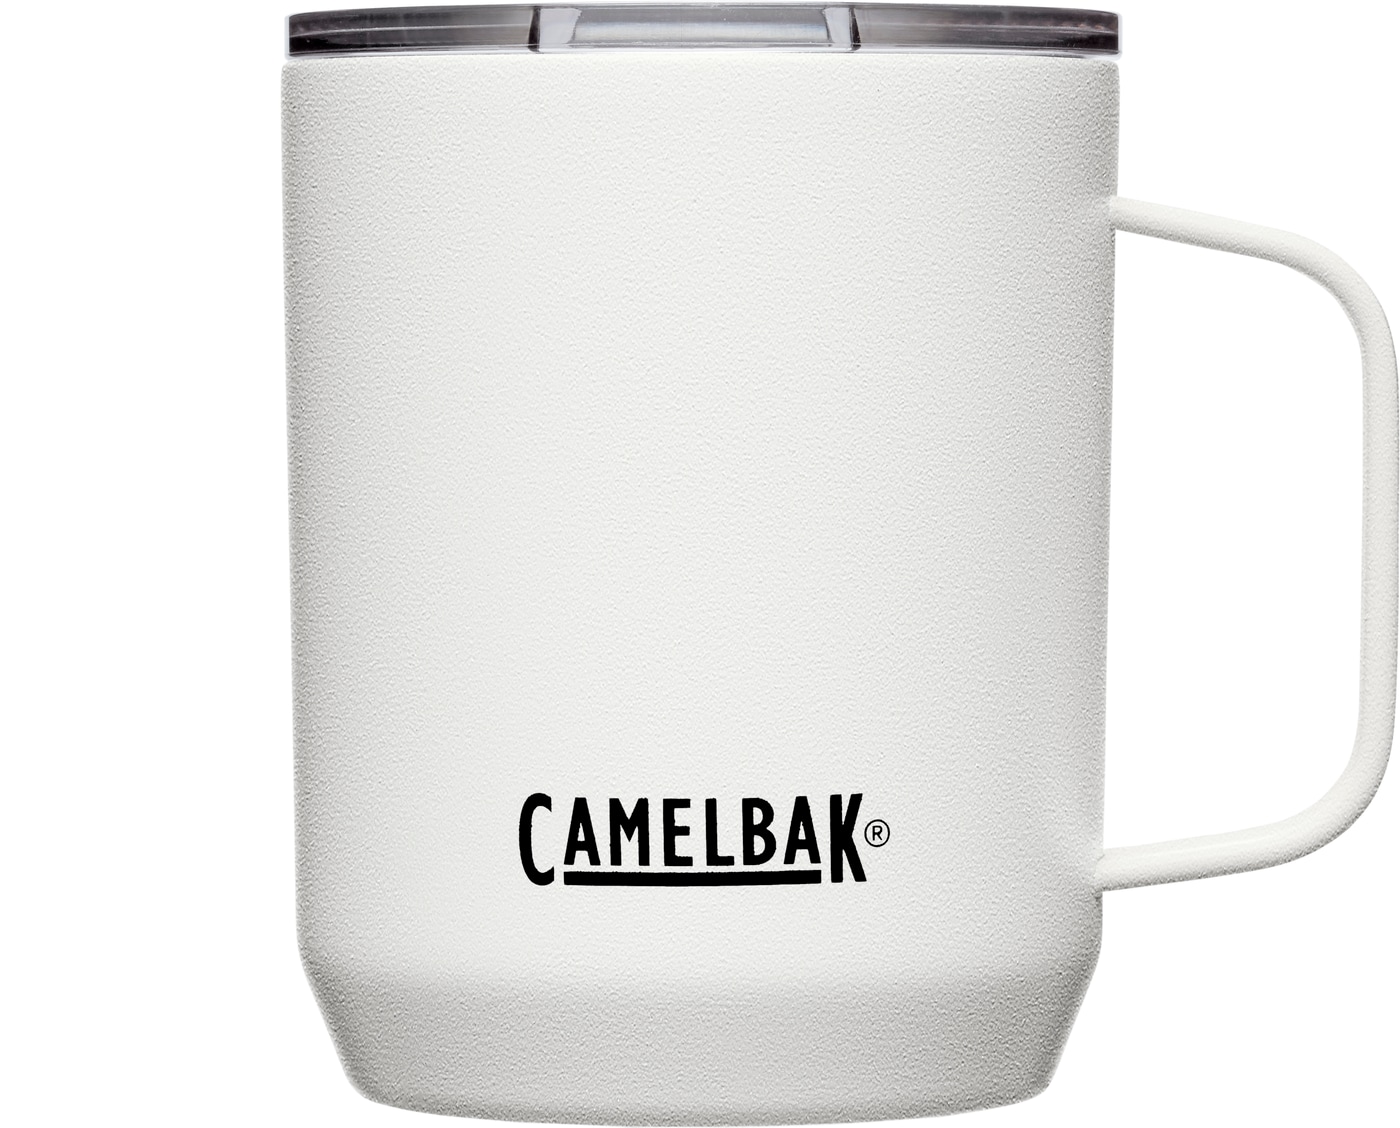 Camelbak Camp Mug